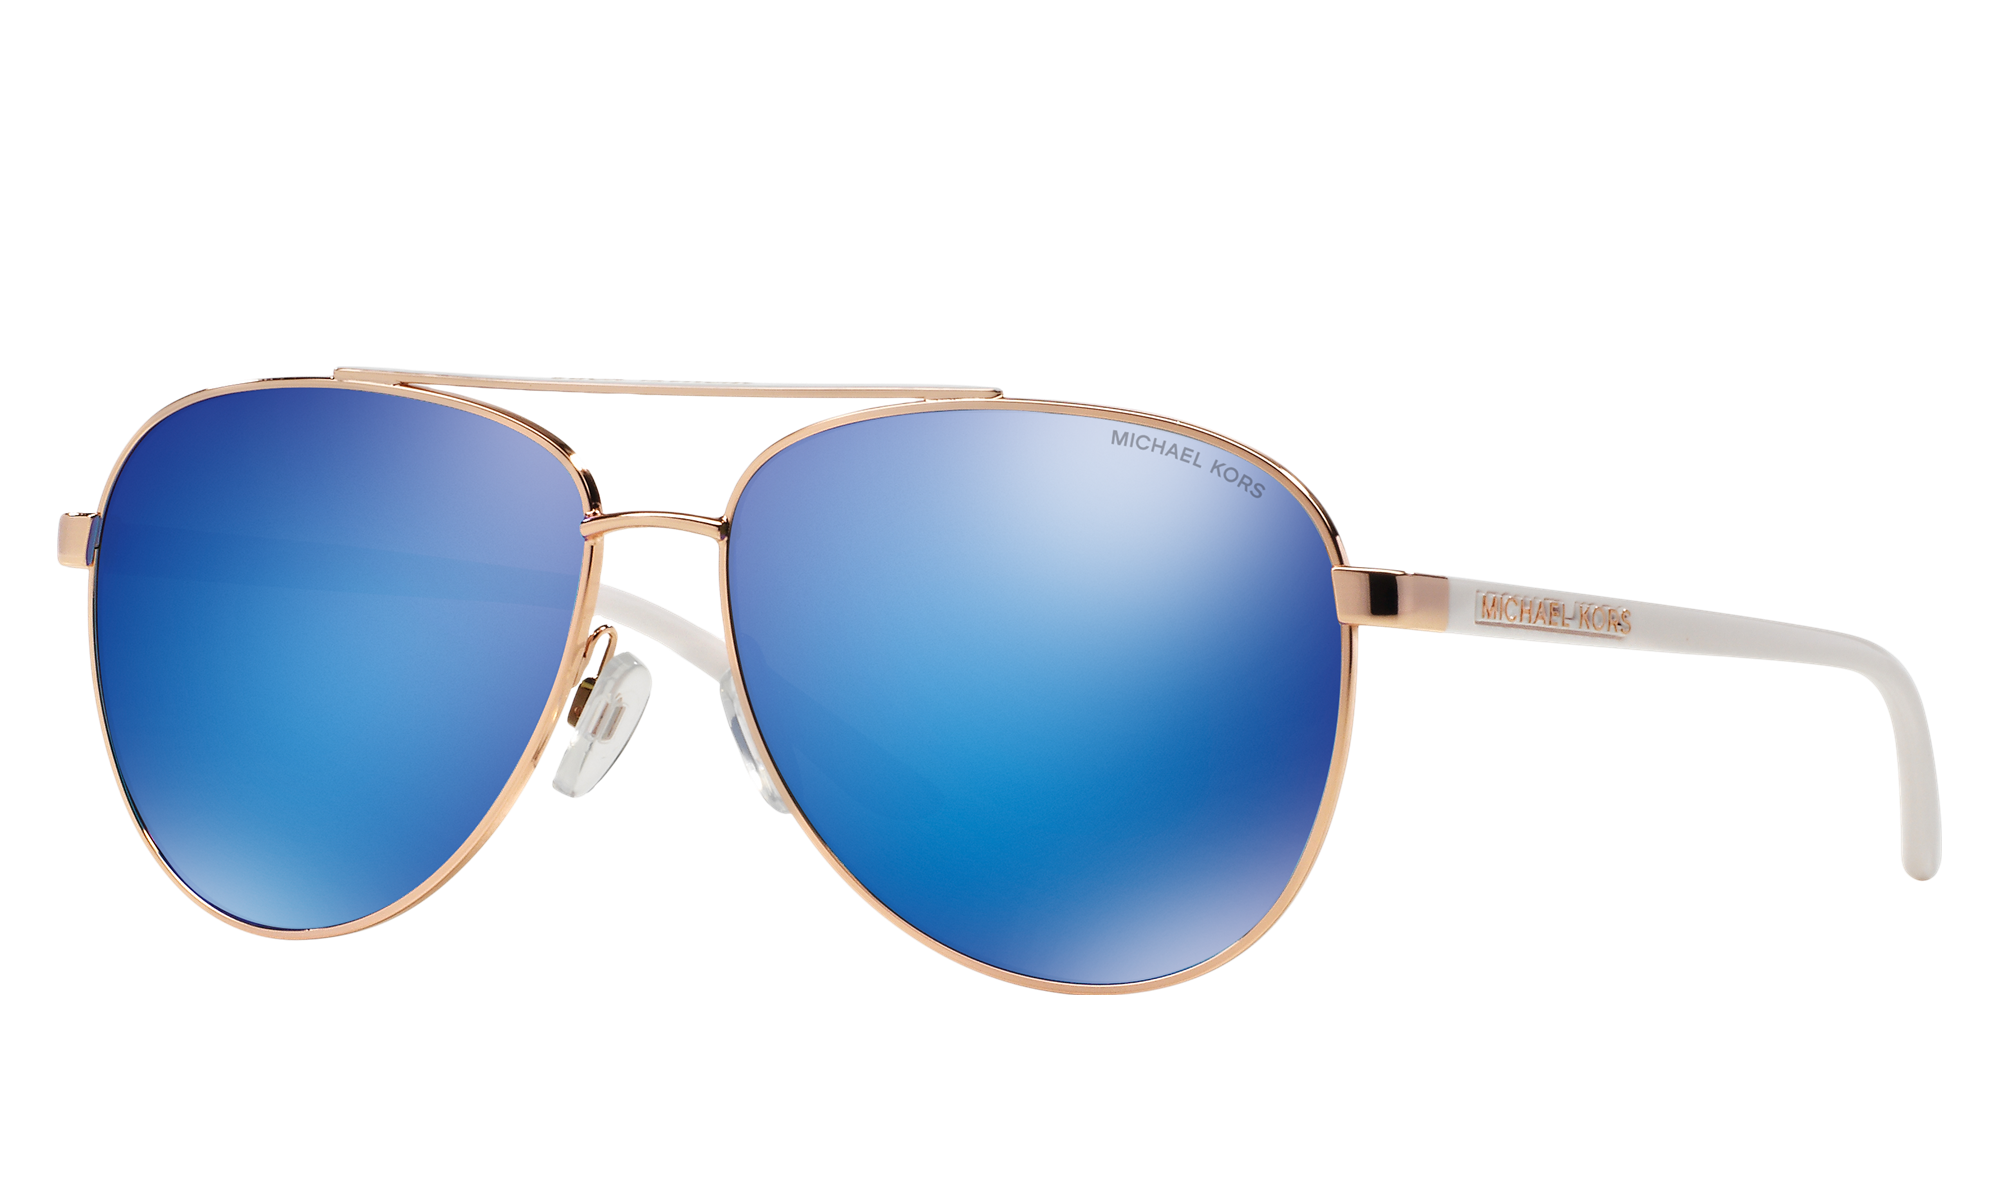 Michael Kors Glasses, Sunglasses 